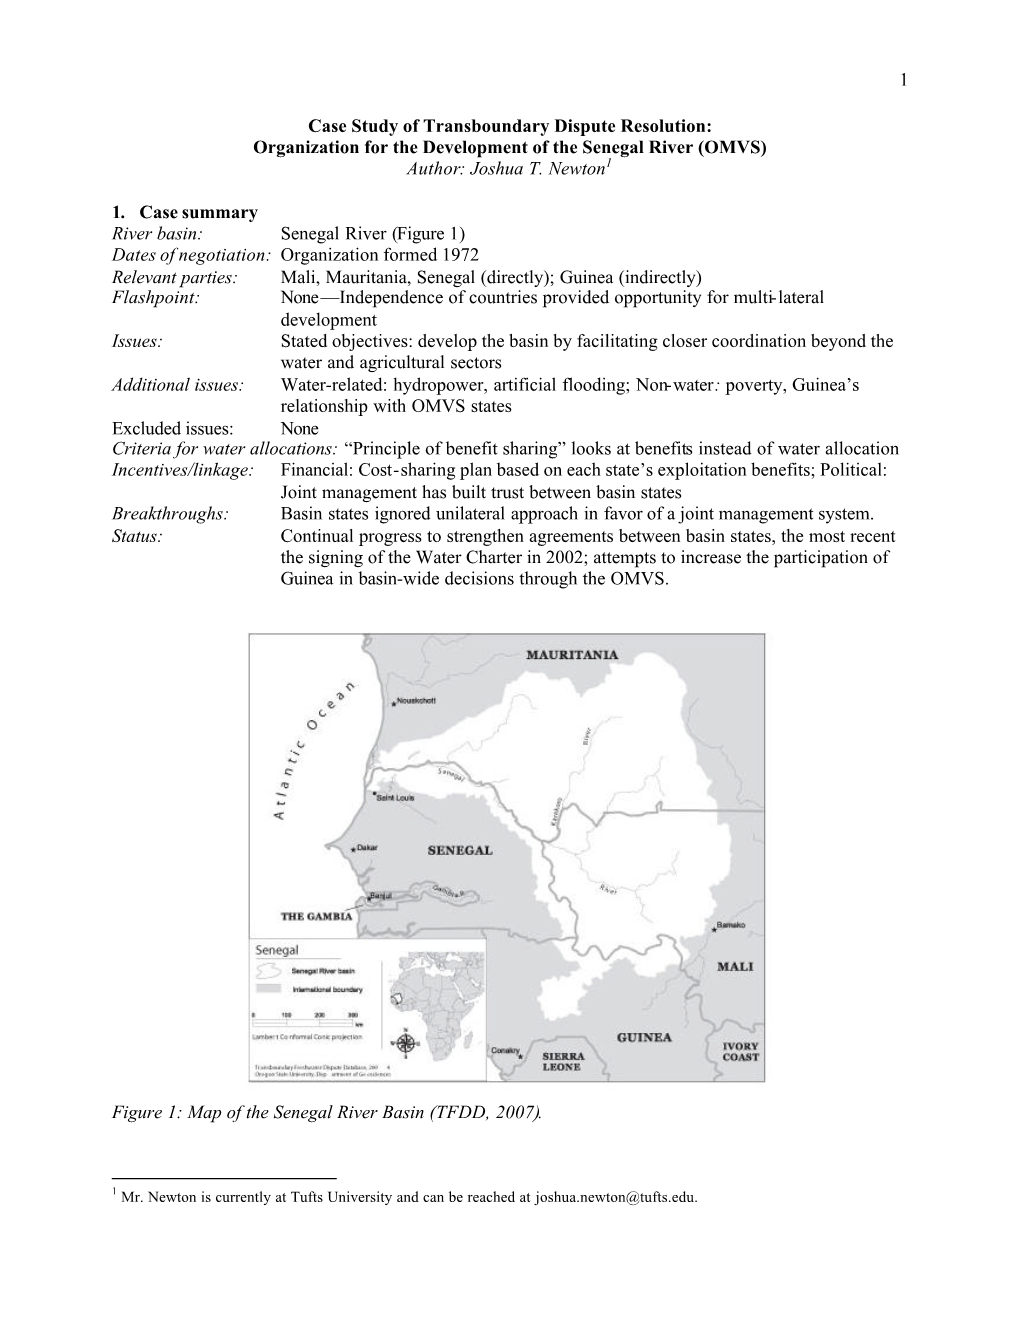 Organization for the Development of the Senegal River (OMVS) Author: Joshua T